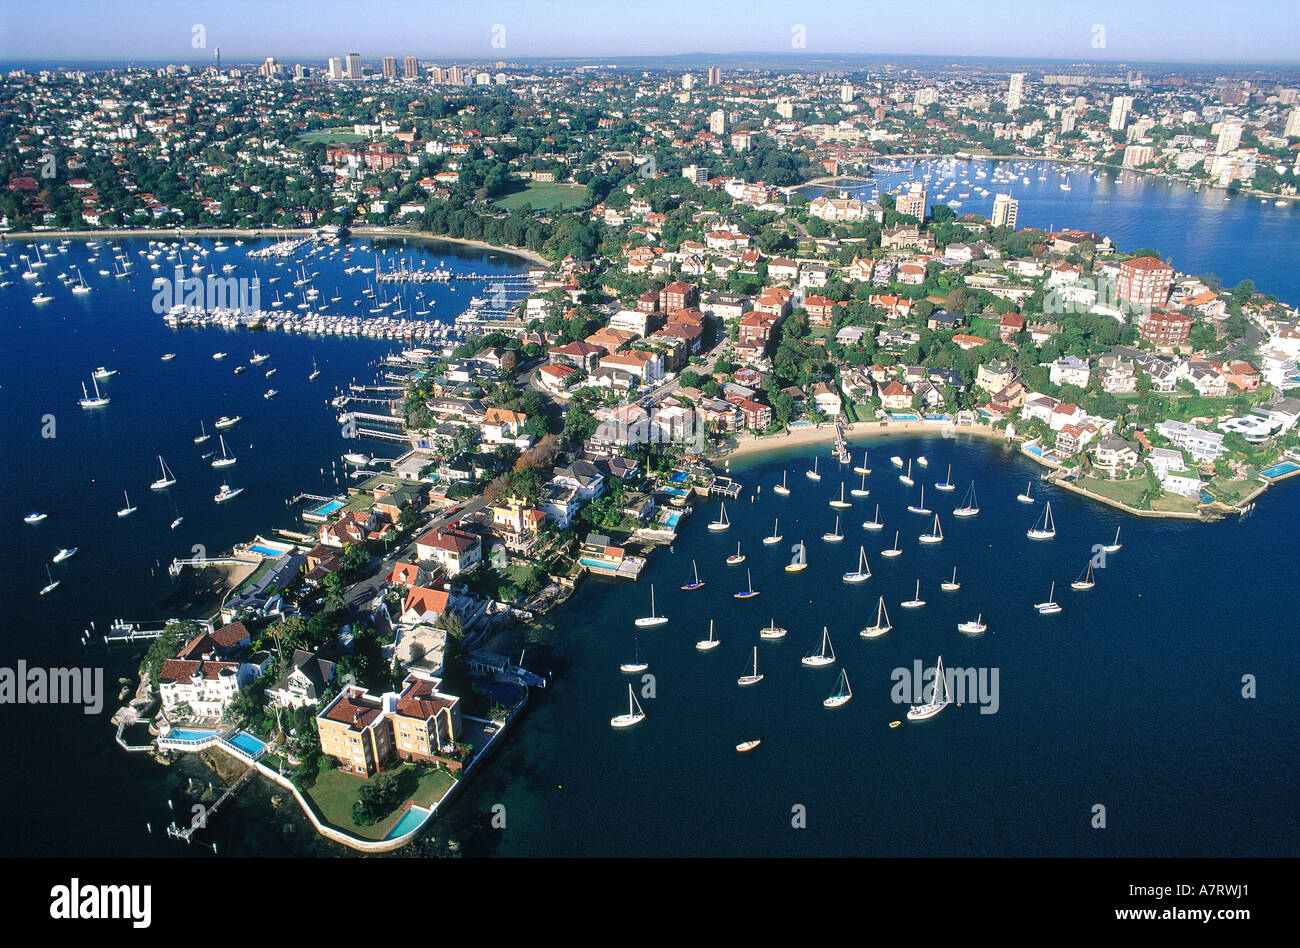 Australien, New South Wales, Sydney, Sydney bay, intelligente Ortsteil  Double Bay, genannt Double Zahlen (Luftbild Stockfotografie - Alamy